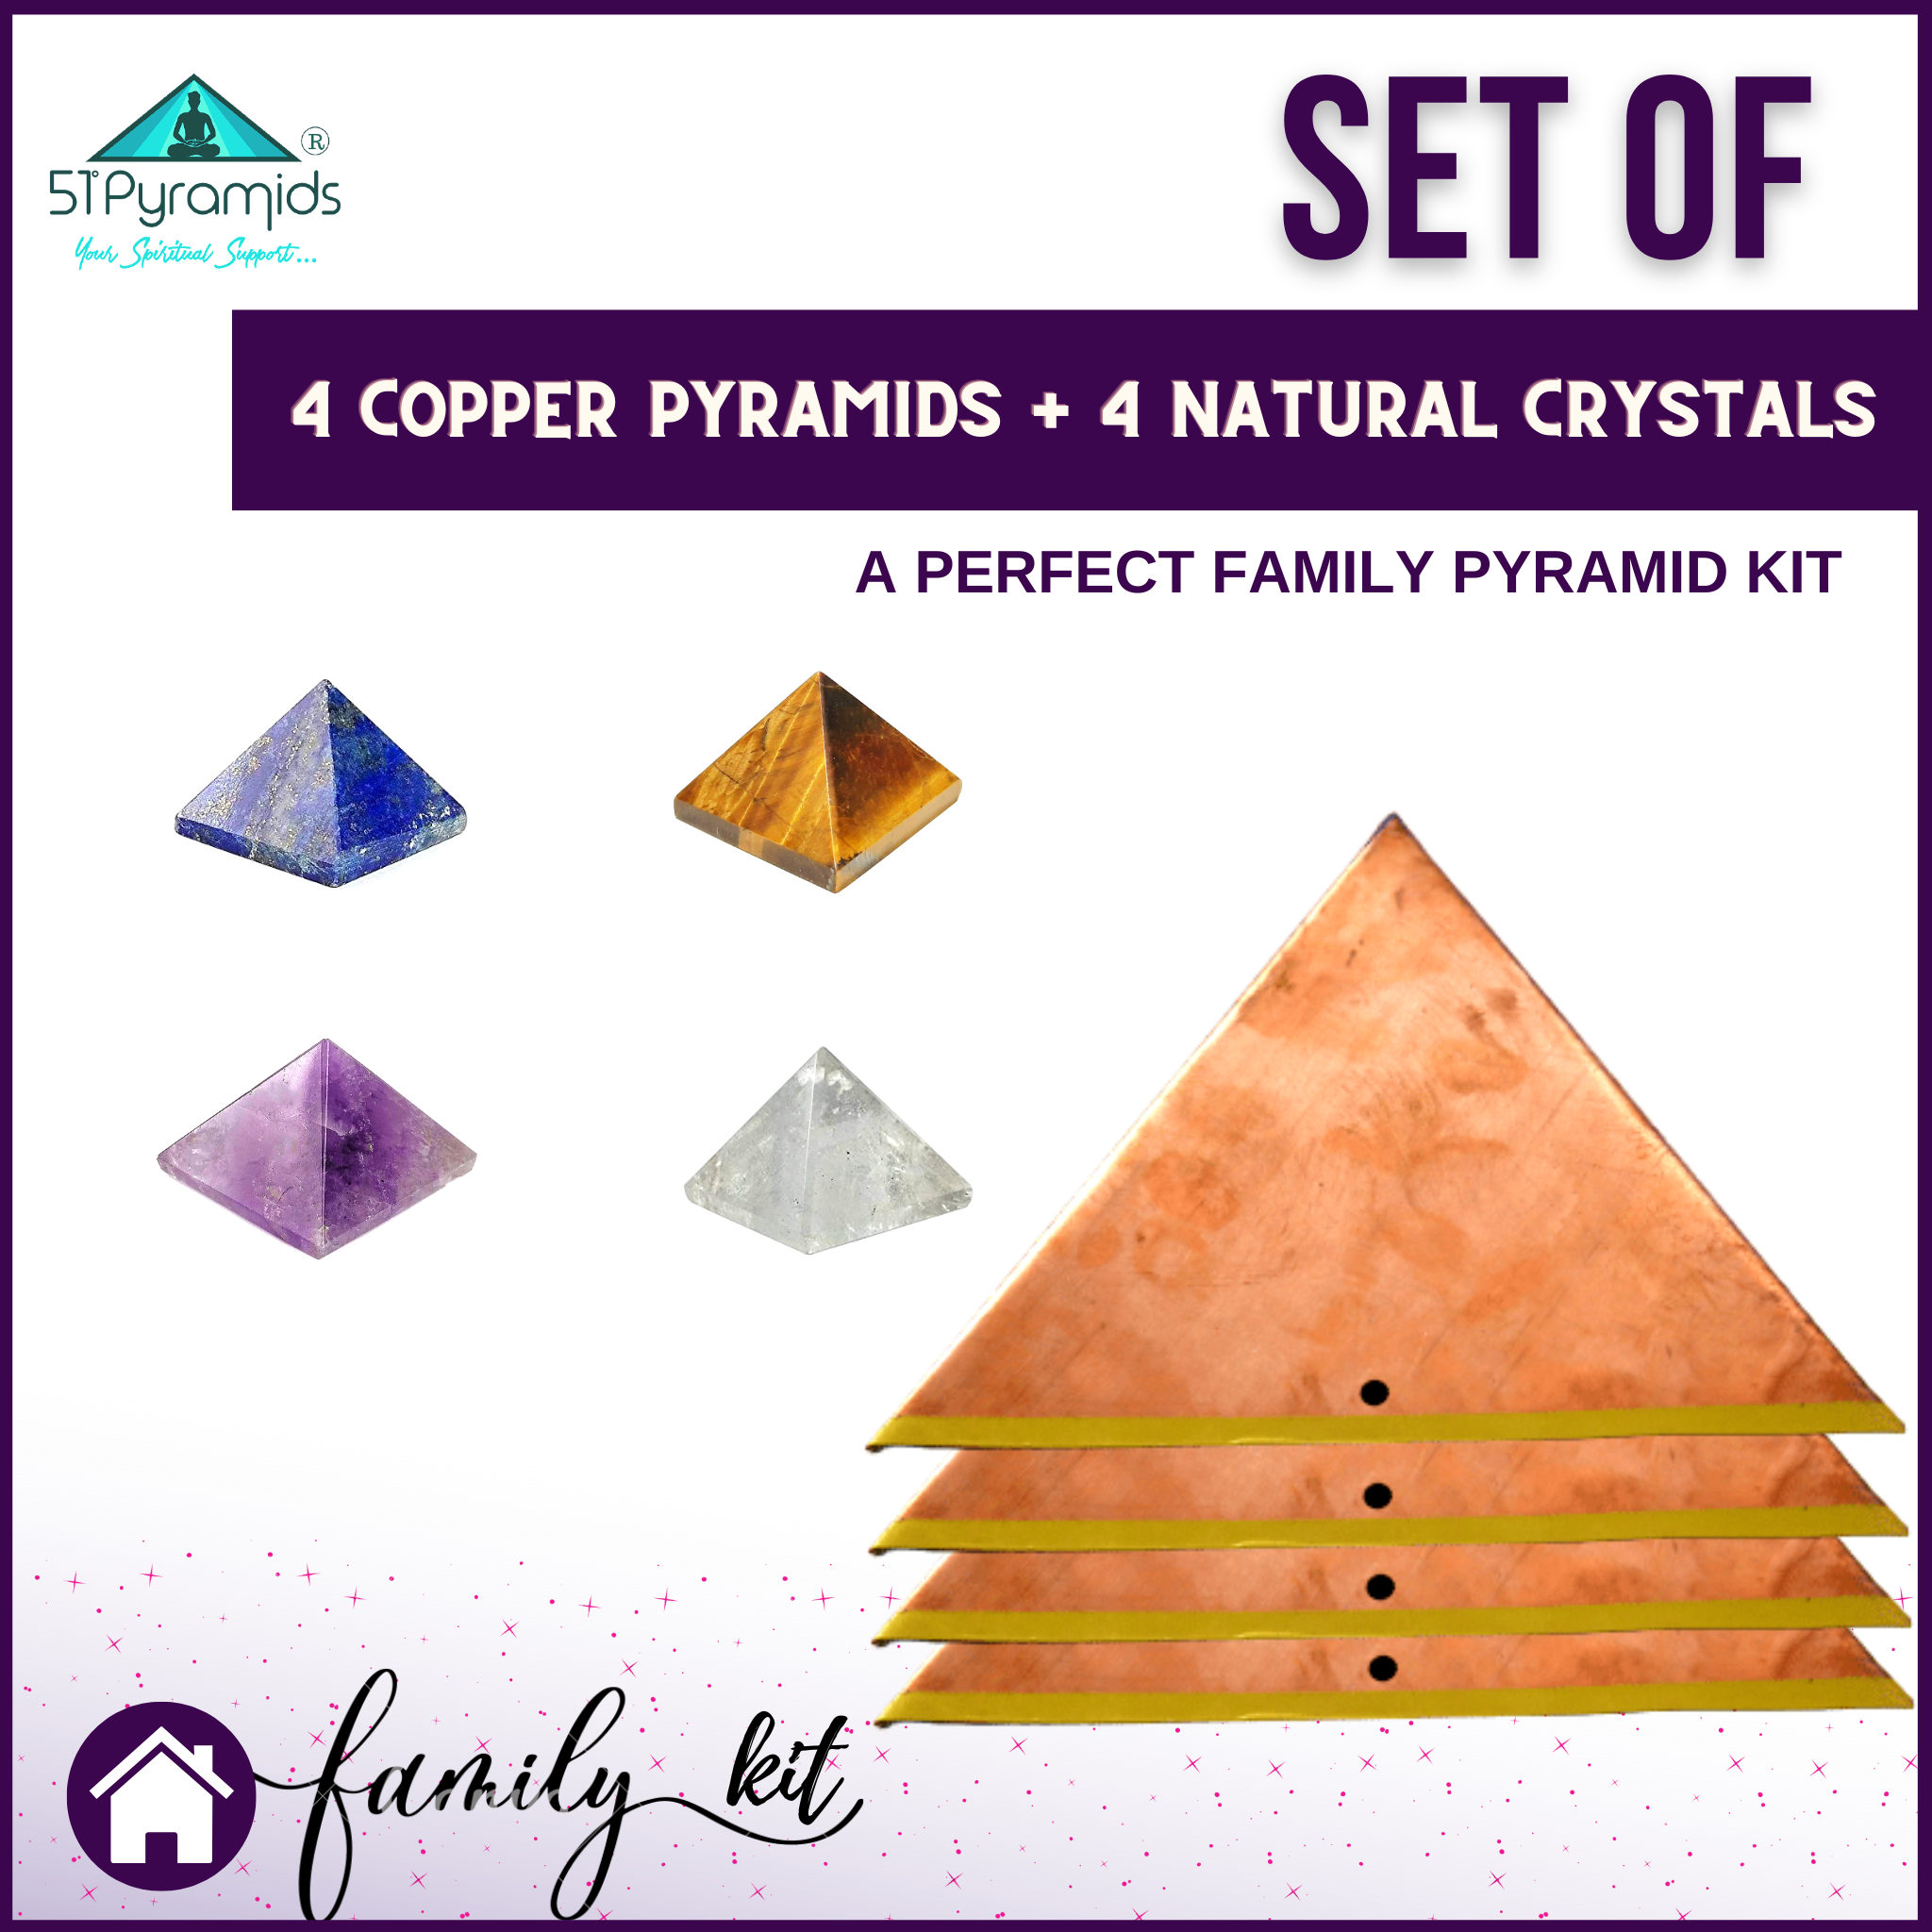 FamilyCombo #2 - Copper Pyramid Meditation Head Caps + Portable Crystals(10mm) for Daily Meditation - Set of 4